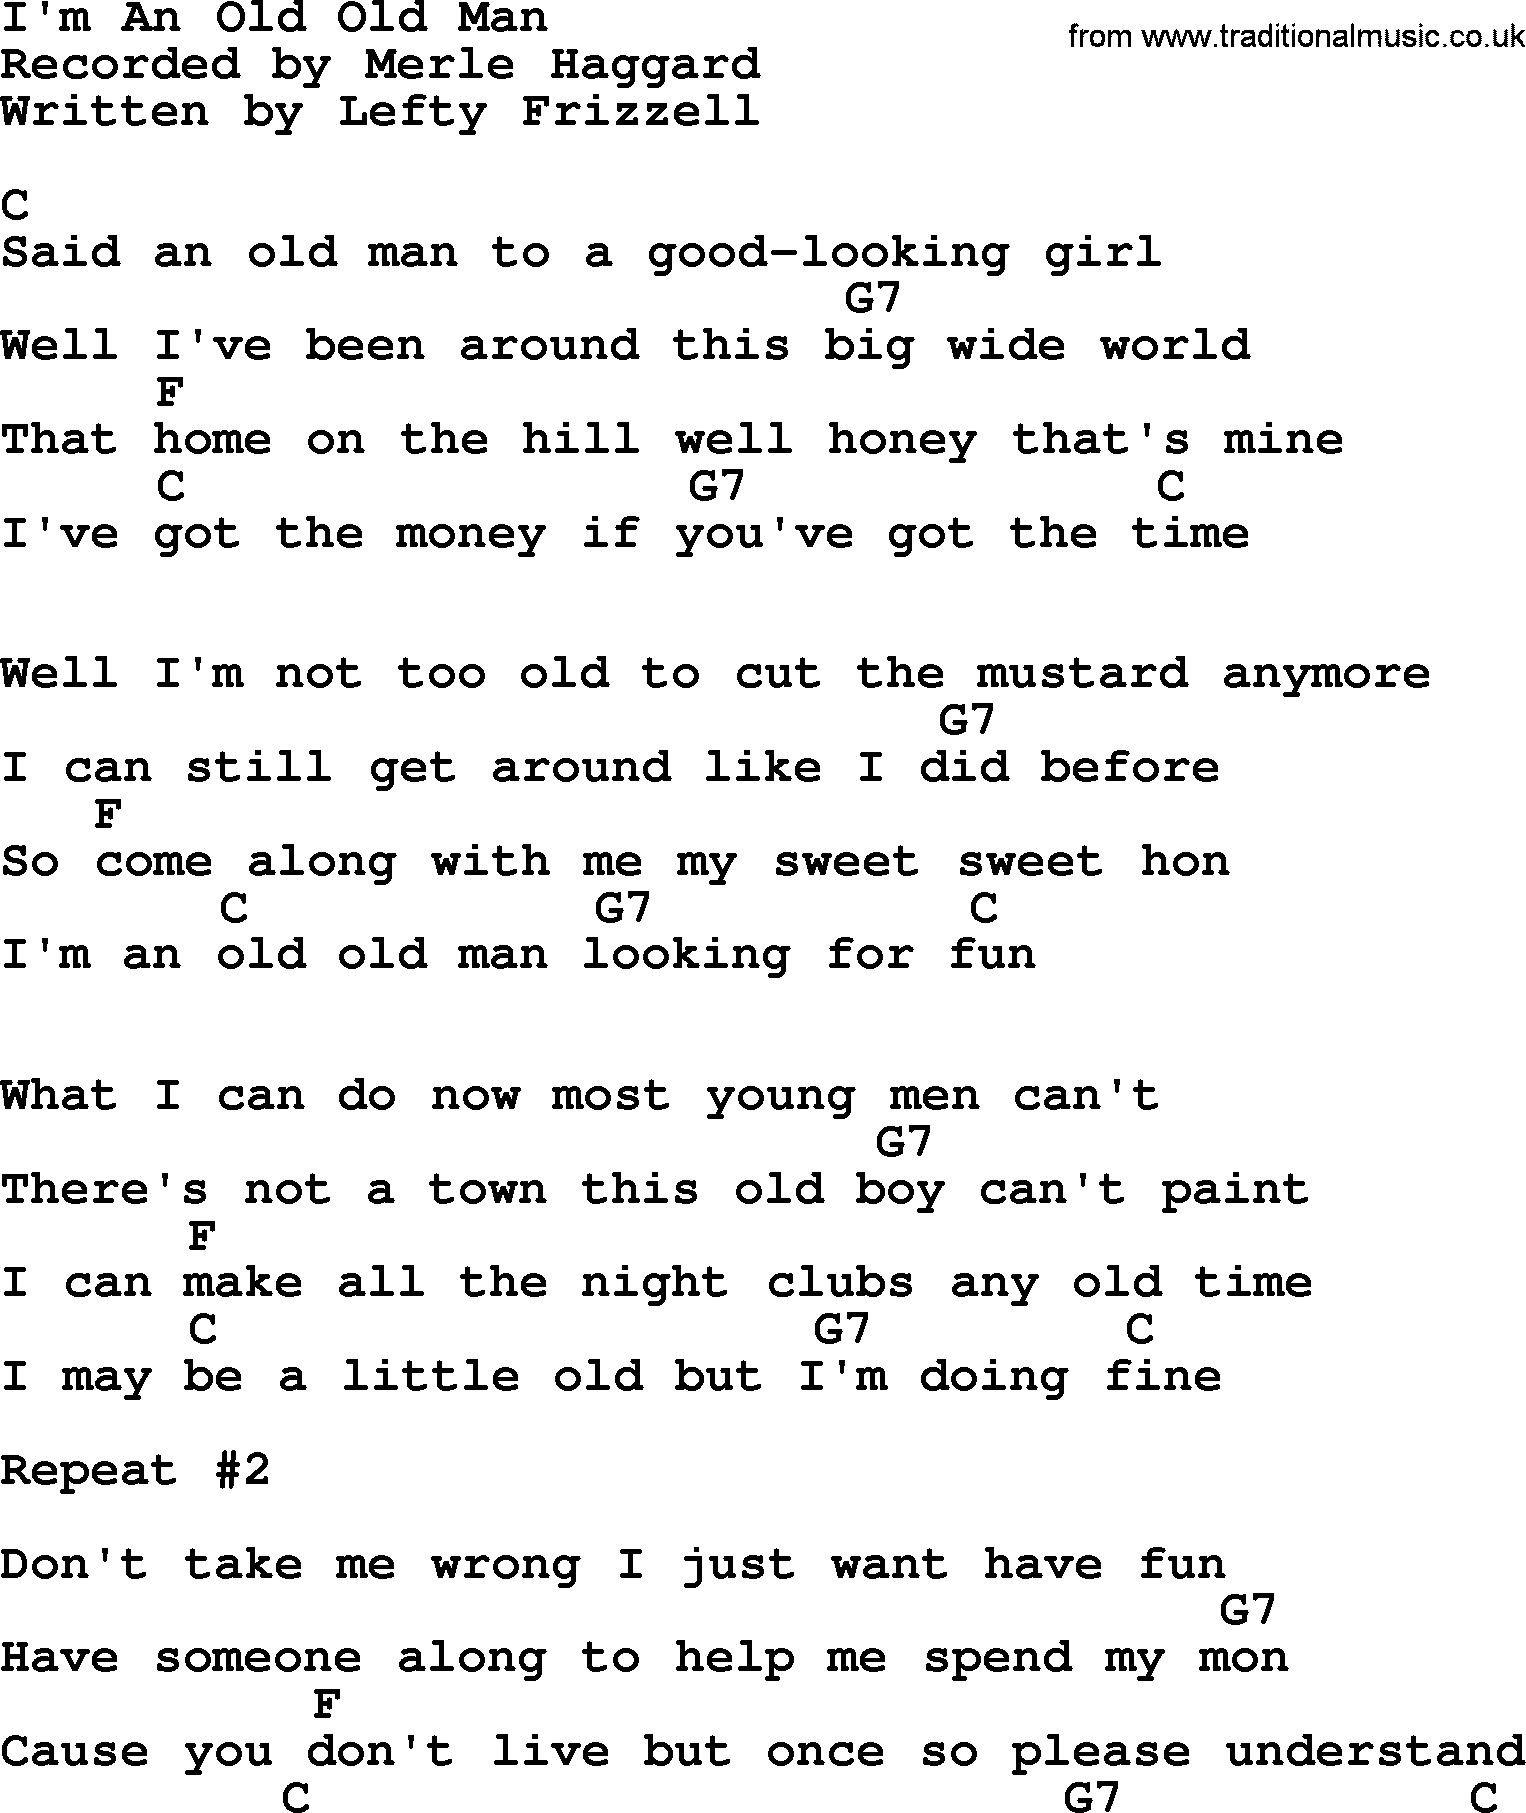 Merle Haggard song: I'm An Old Old Man, lyrics and chords